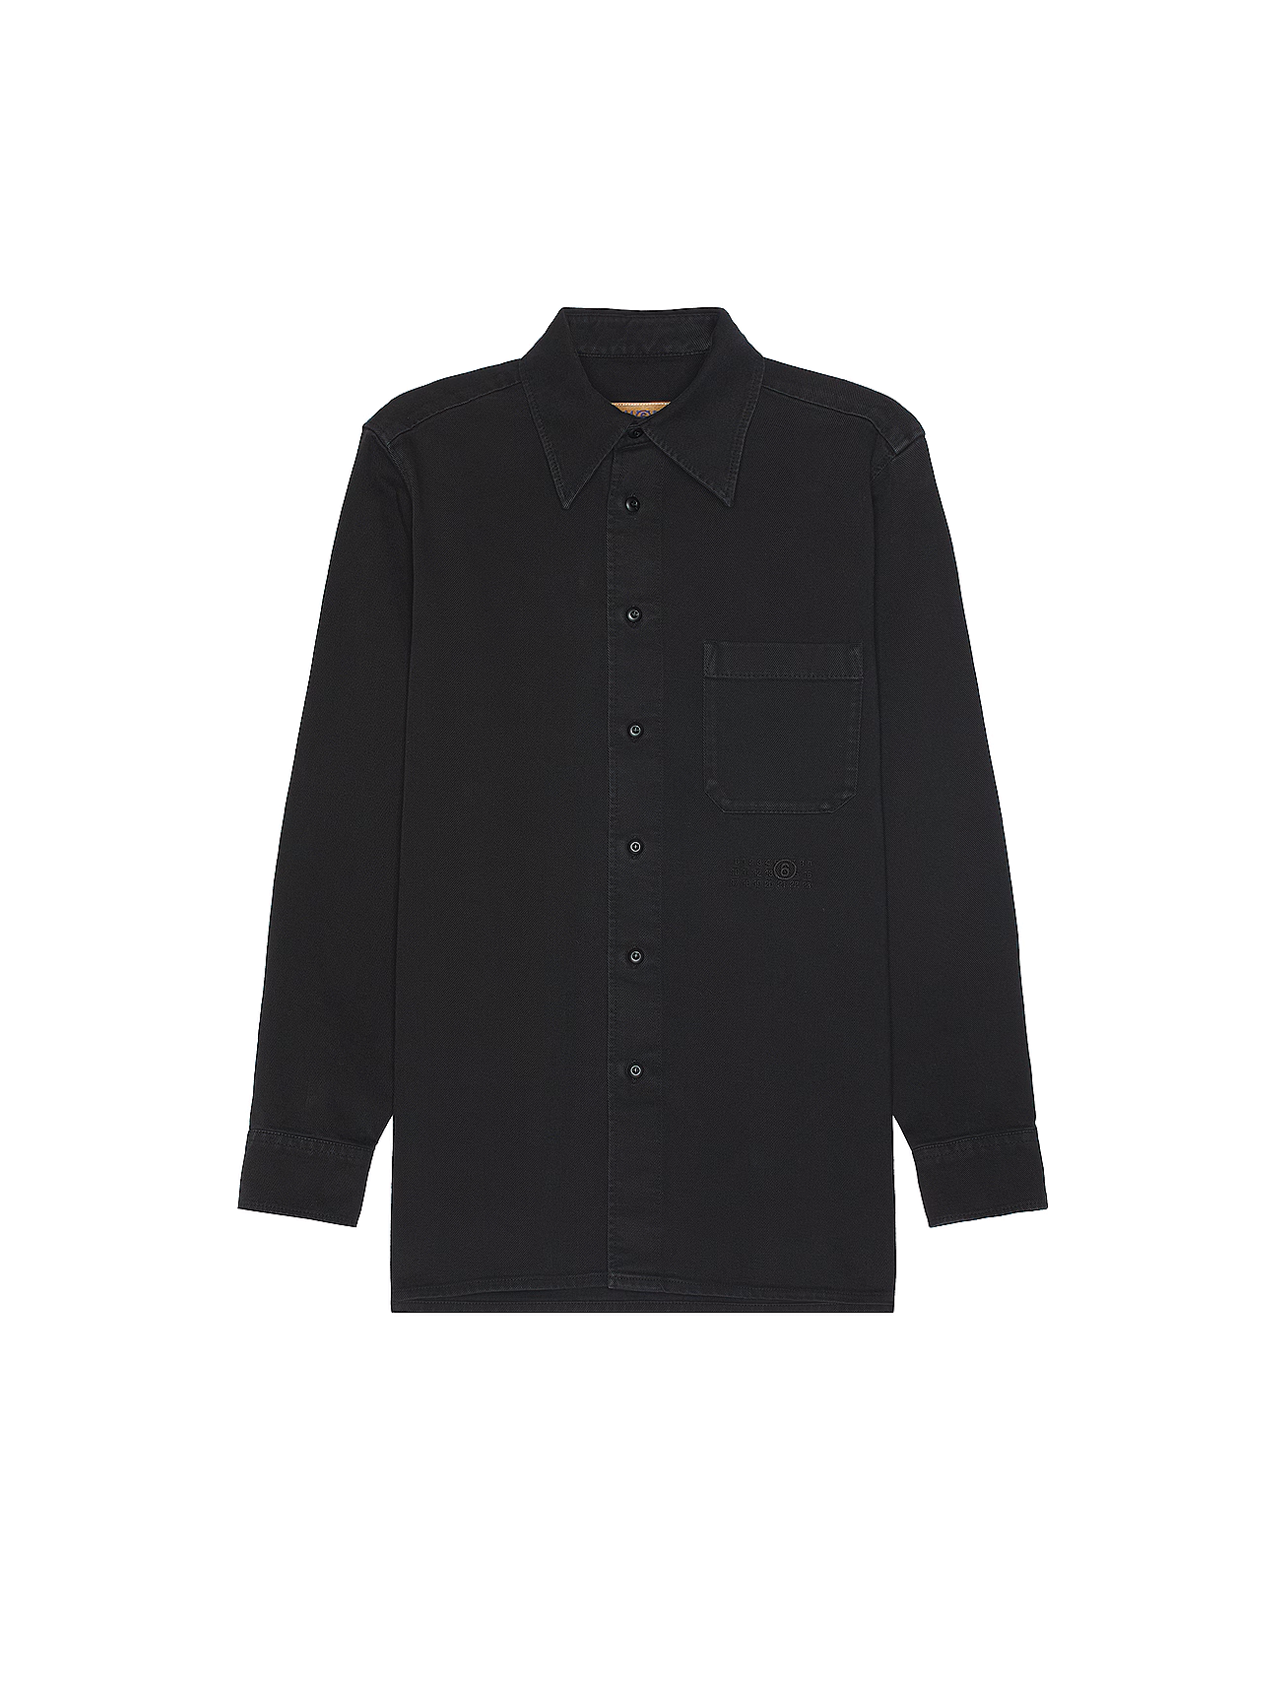 MM6 Black Cotton Twill Button Up Shirt